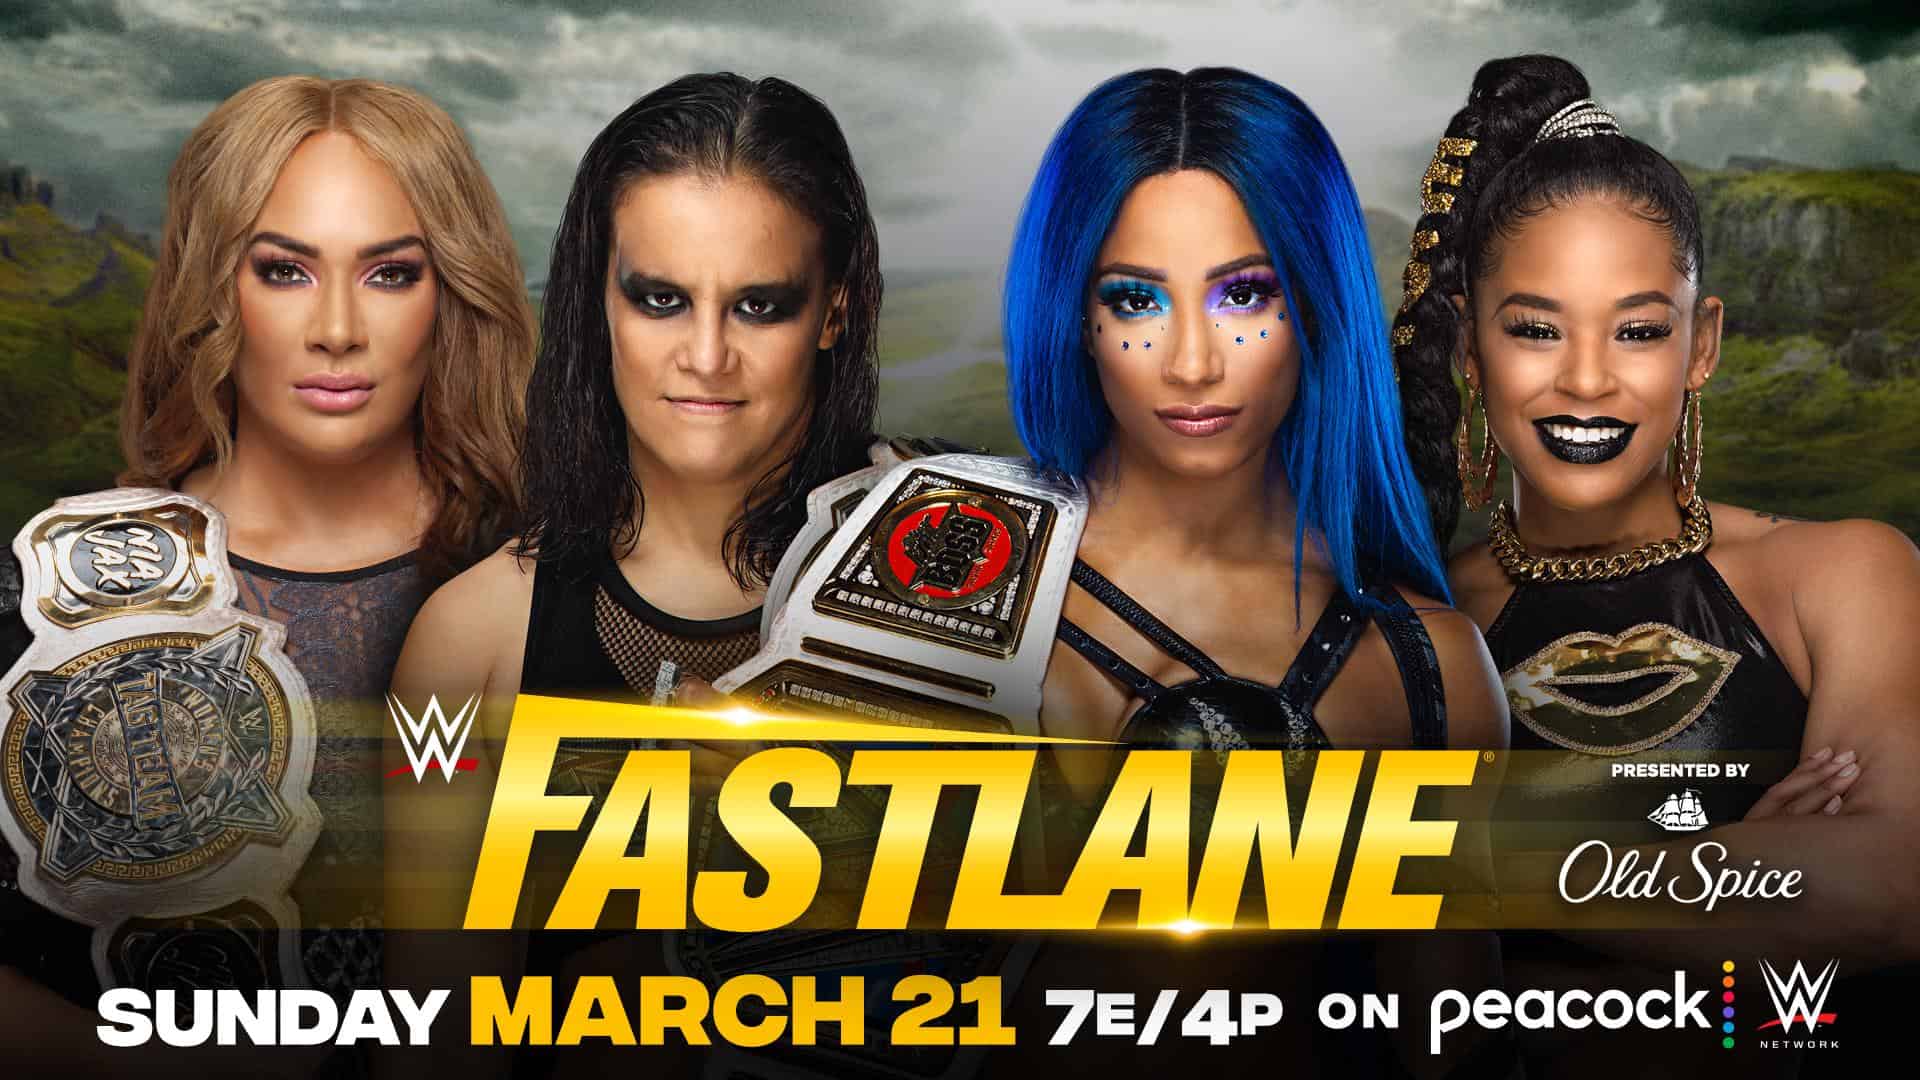 Fastlane Match WWE Women's Championship